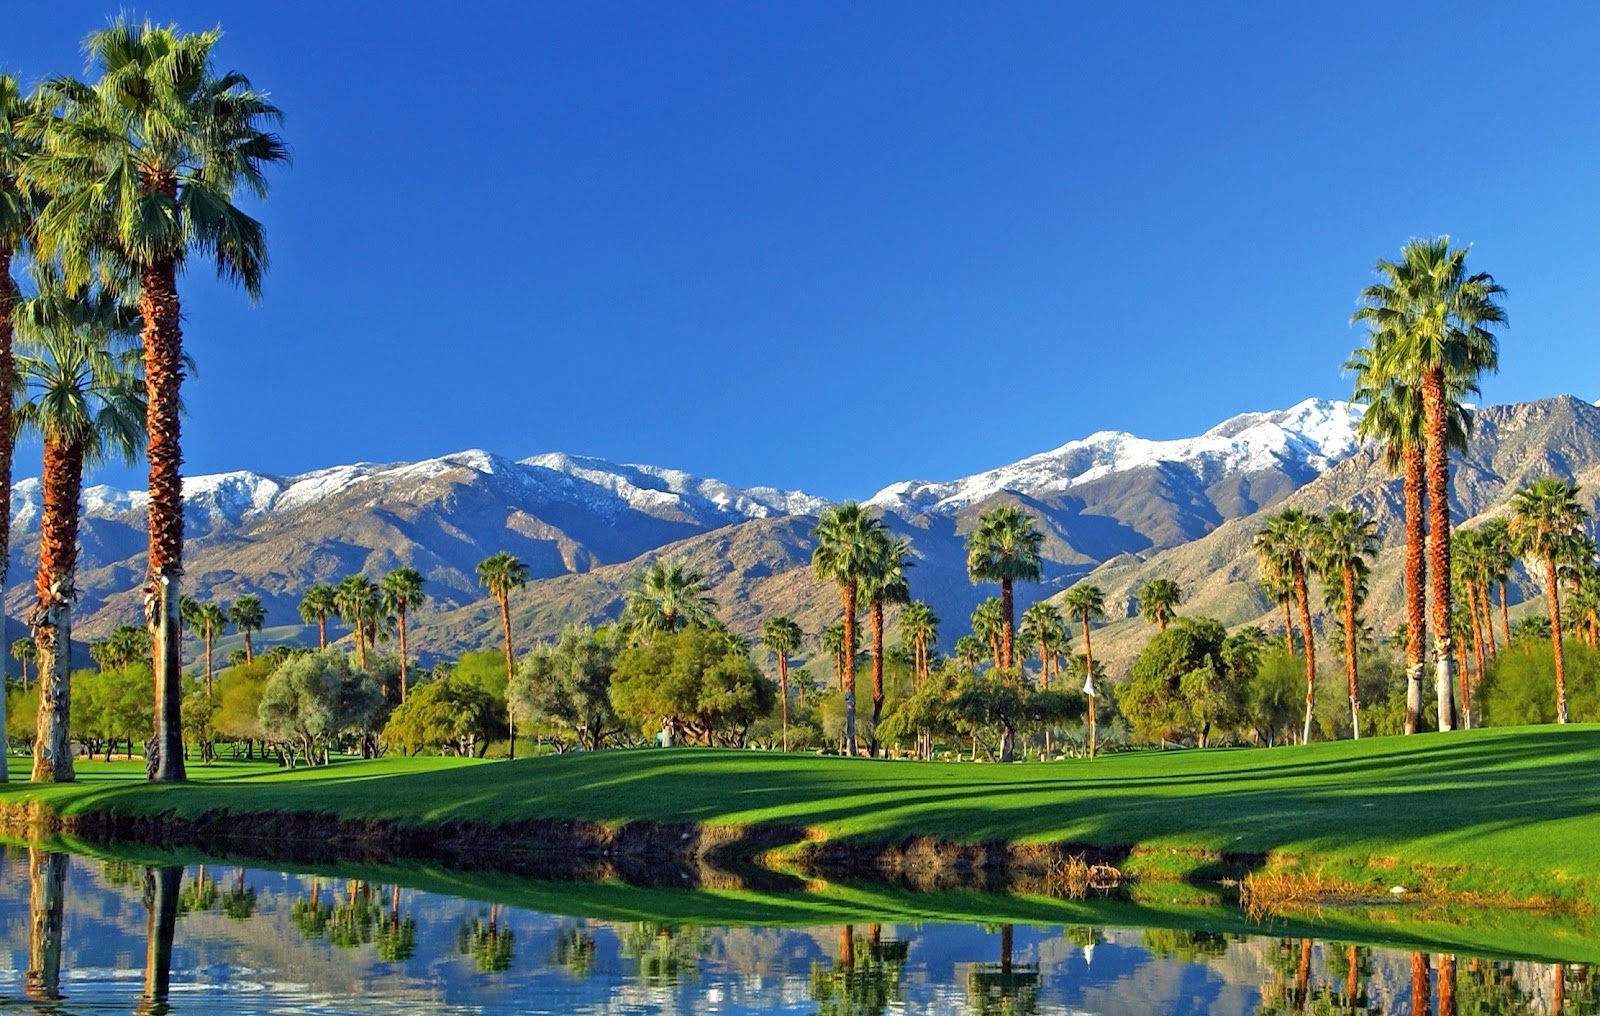 Best Palm Springs Desktop Backgrounds